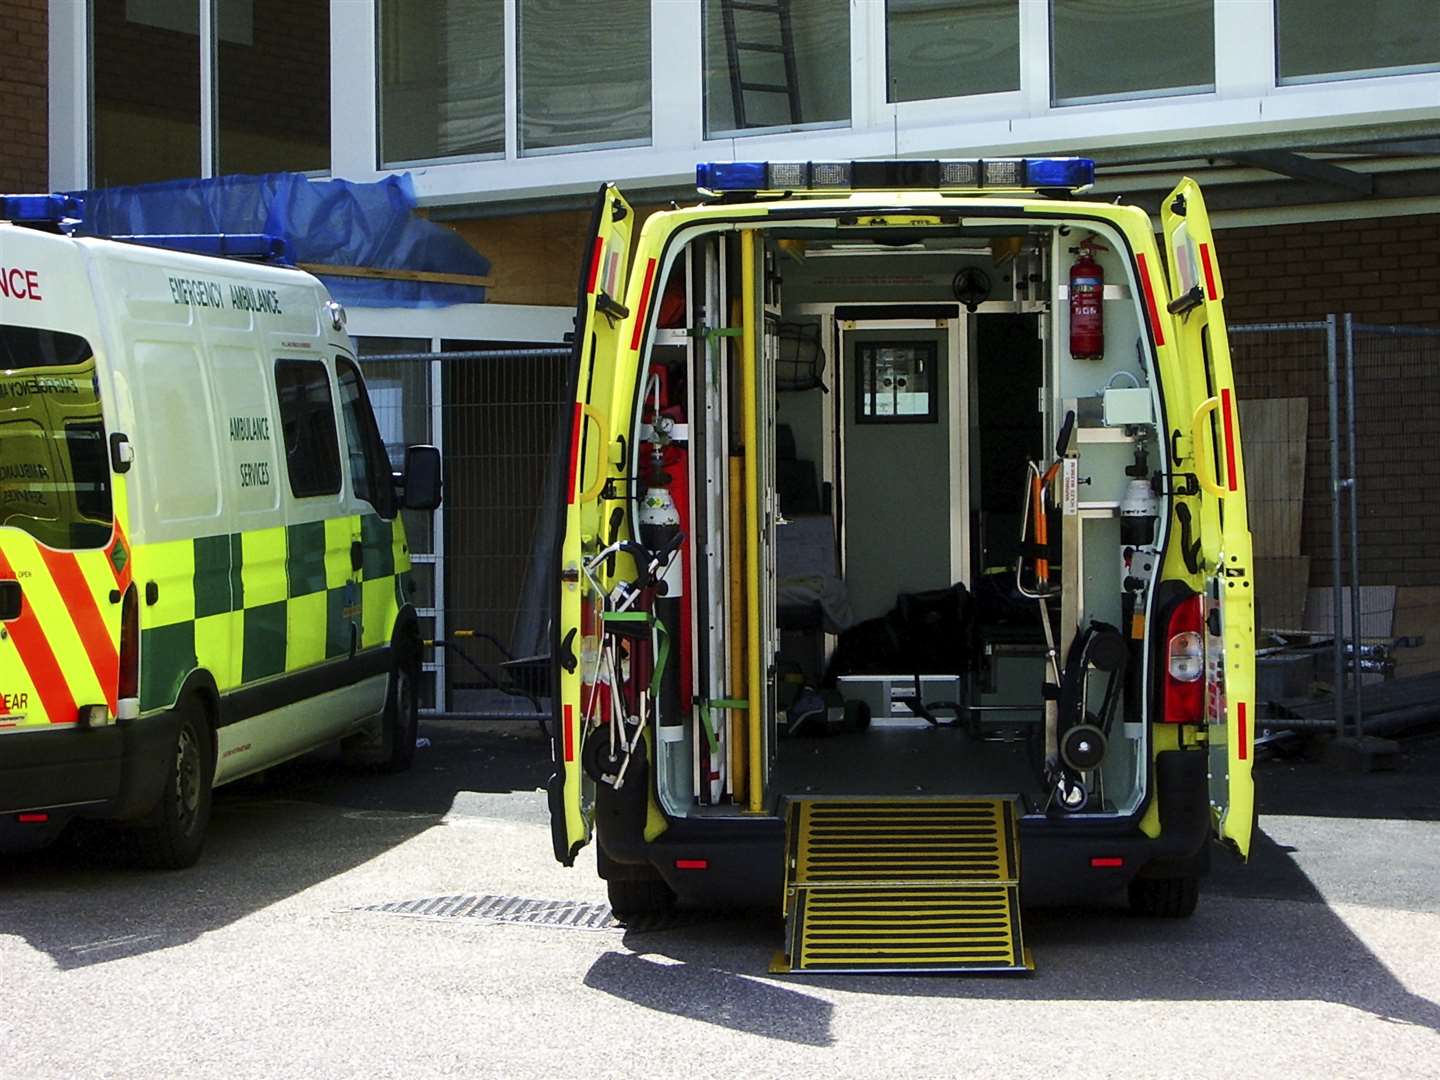 An ambulance arrives at hospital